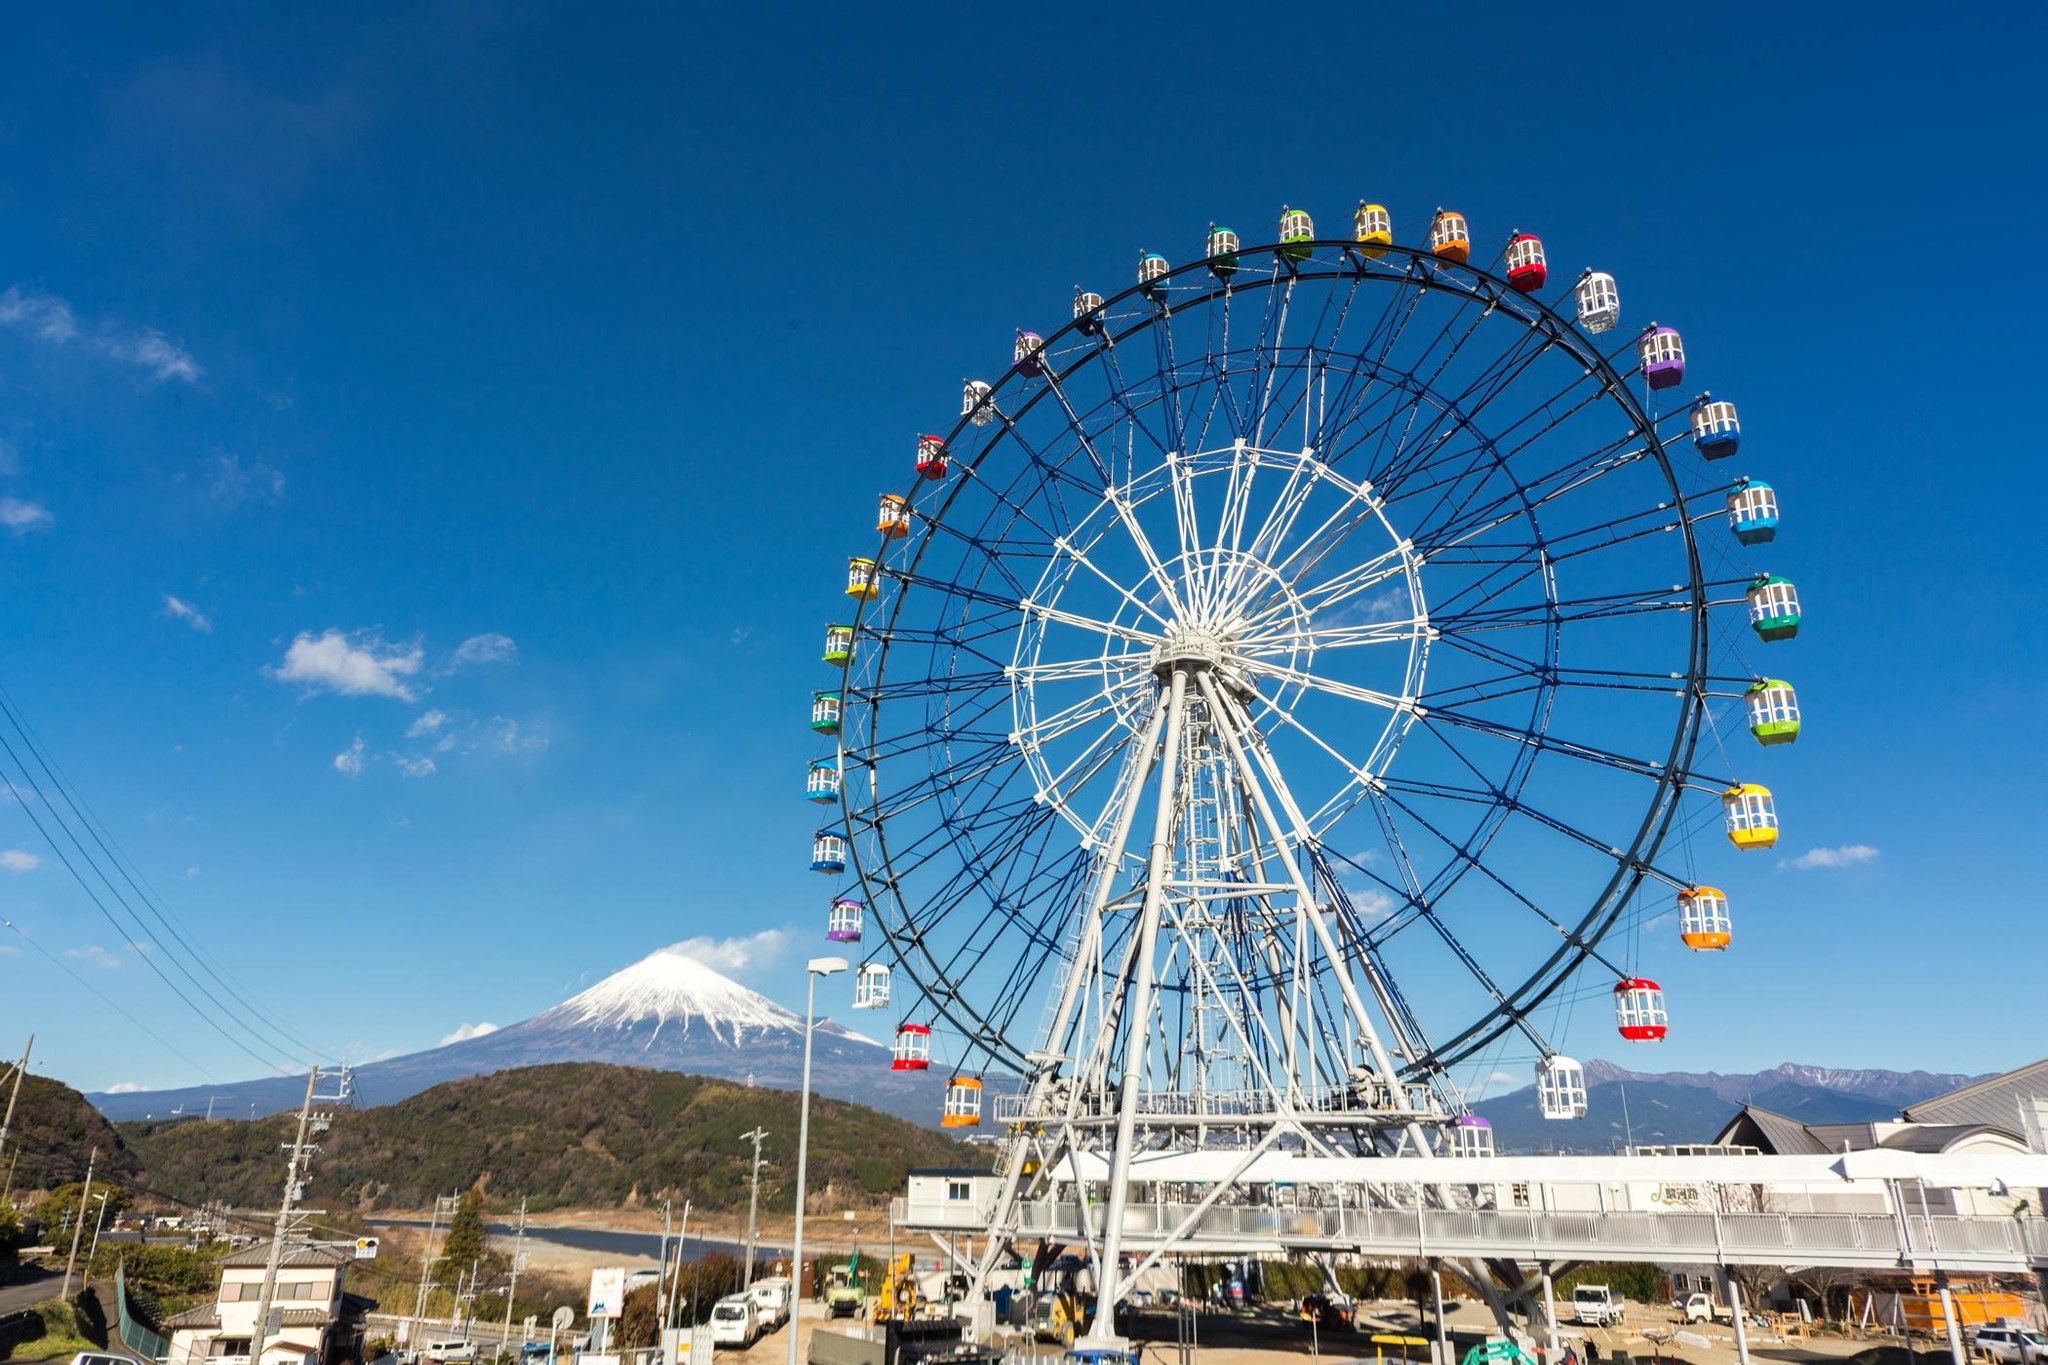 E1東名高速道路expasa富士川 上り 大観覧車 Fuji Sky View で１周年感謝祭を開催します 中日本エクシス株式会社のプレスリリース